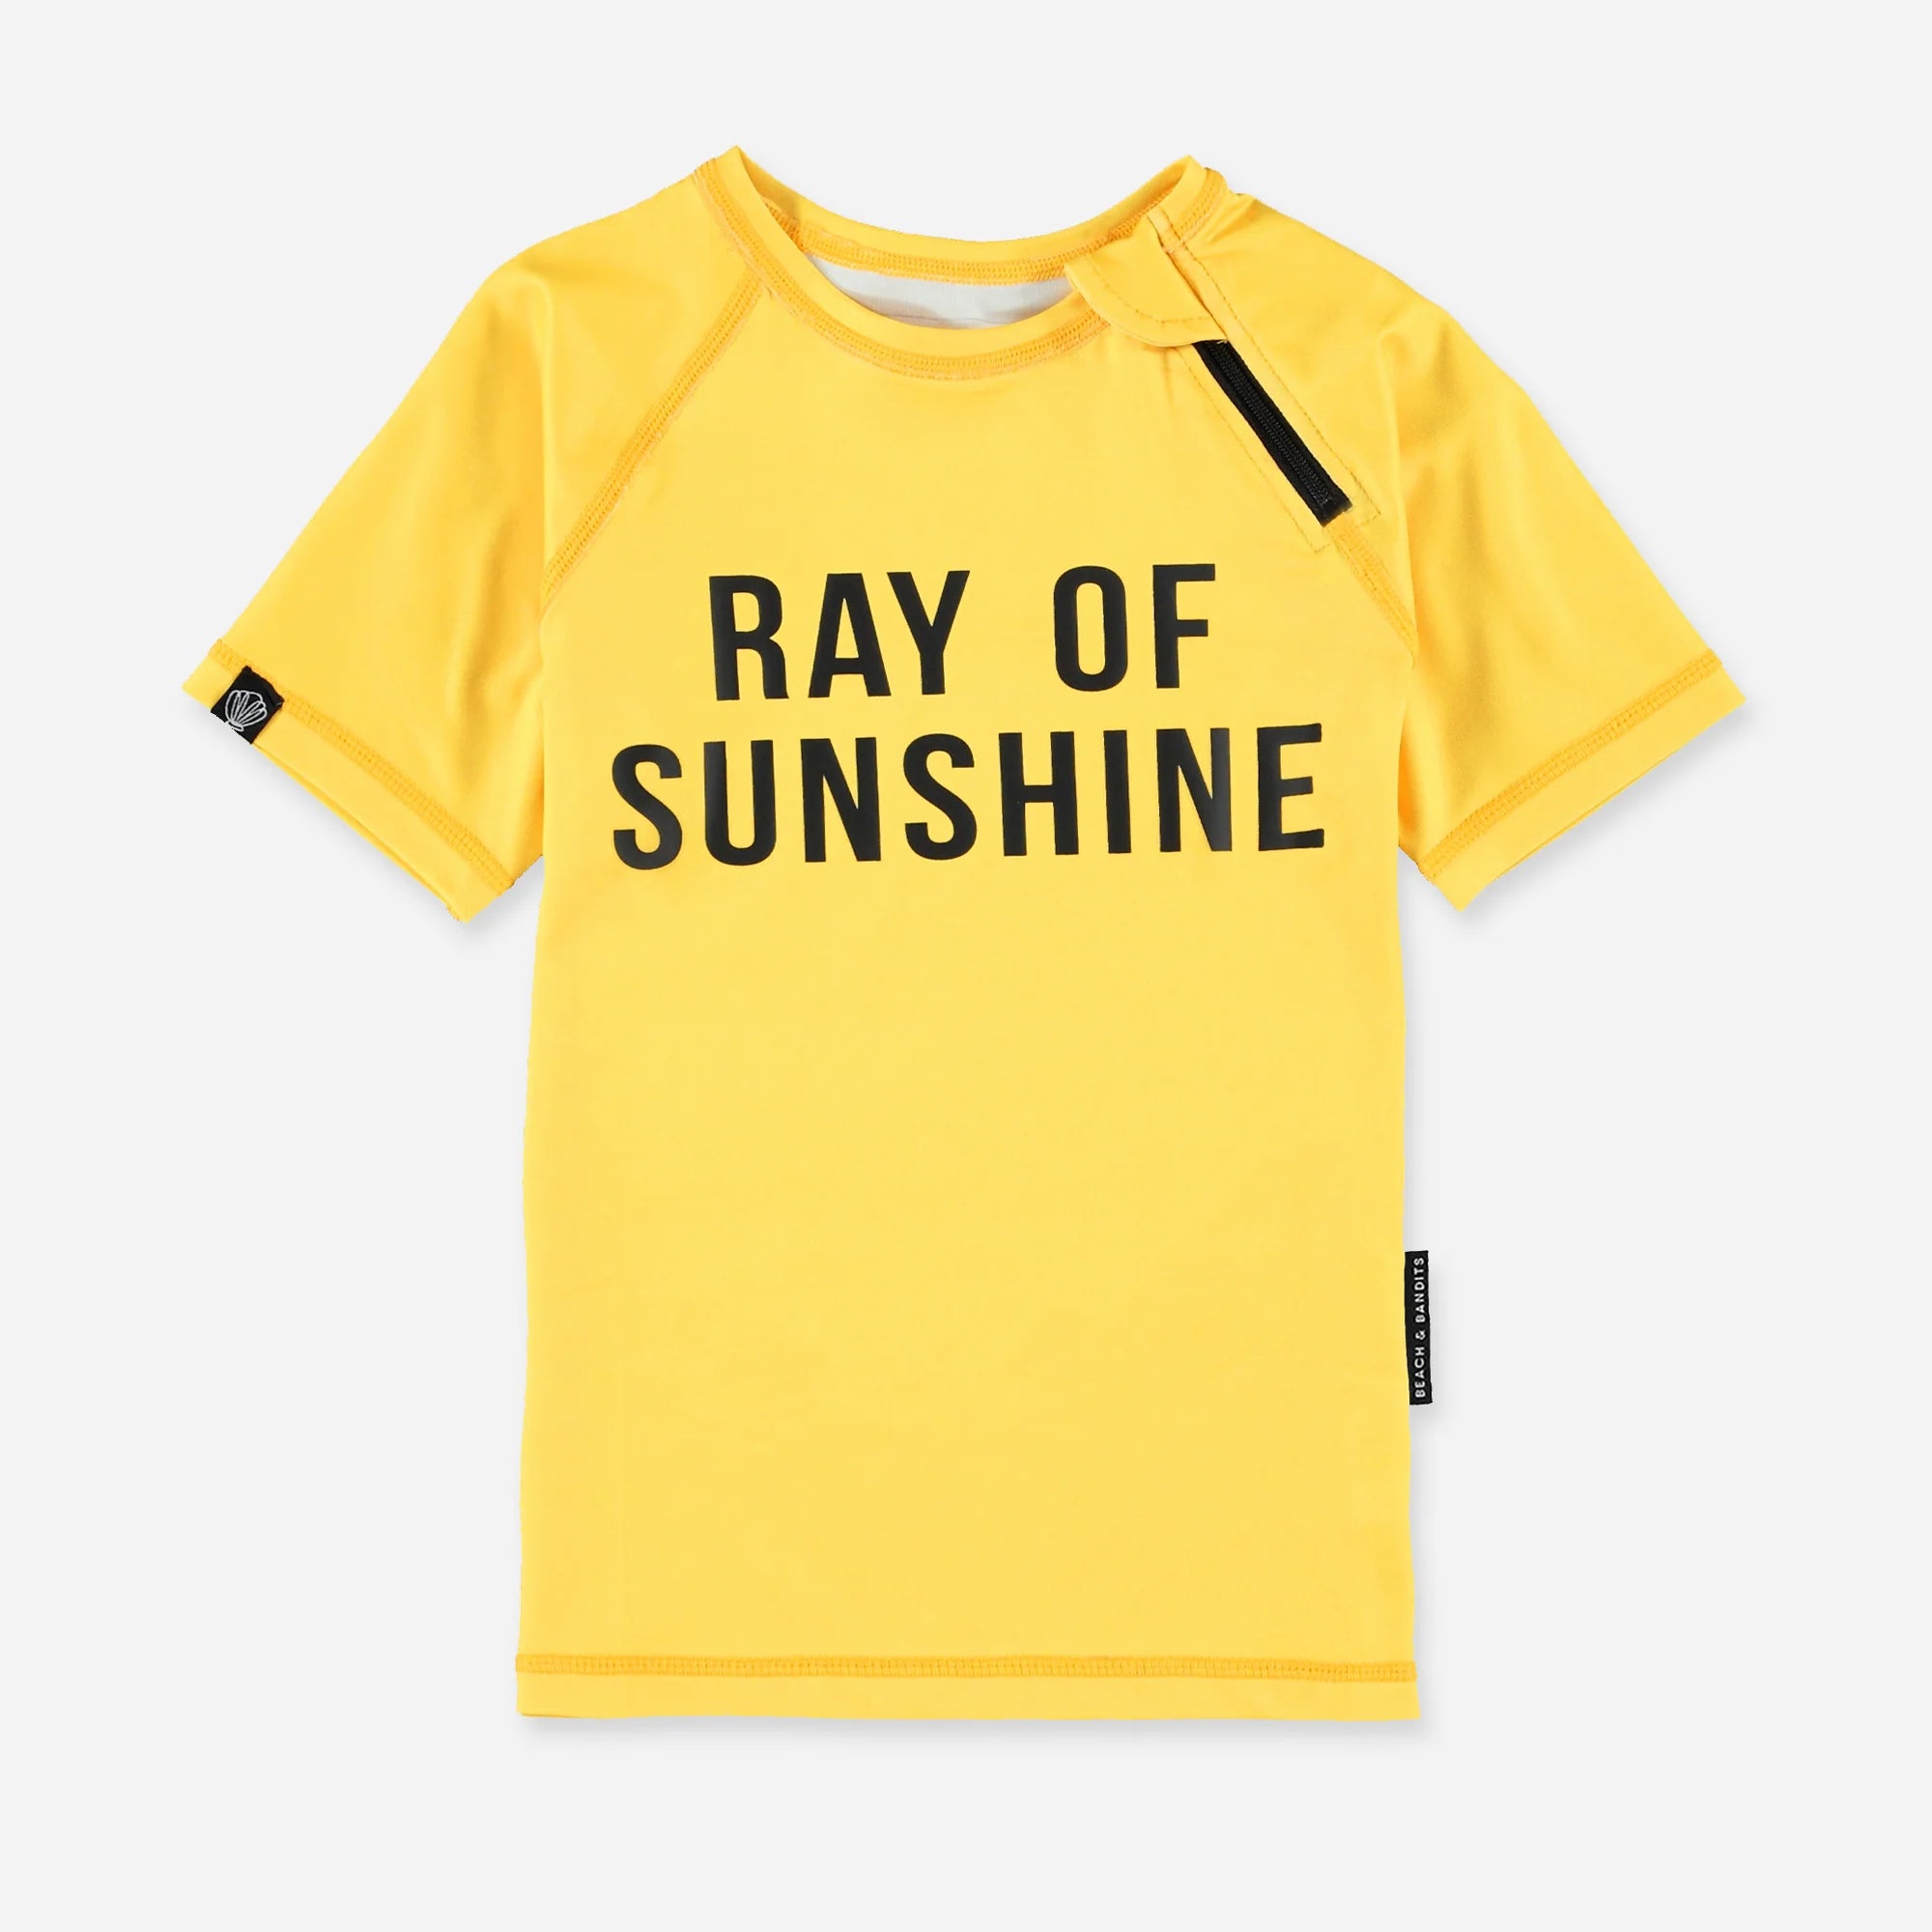 Beach & Bandits - "Ray of Sunshine" Rashguard T-shirt